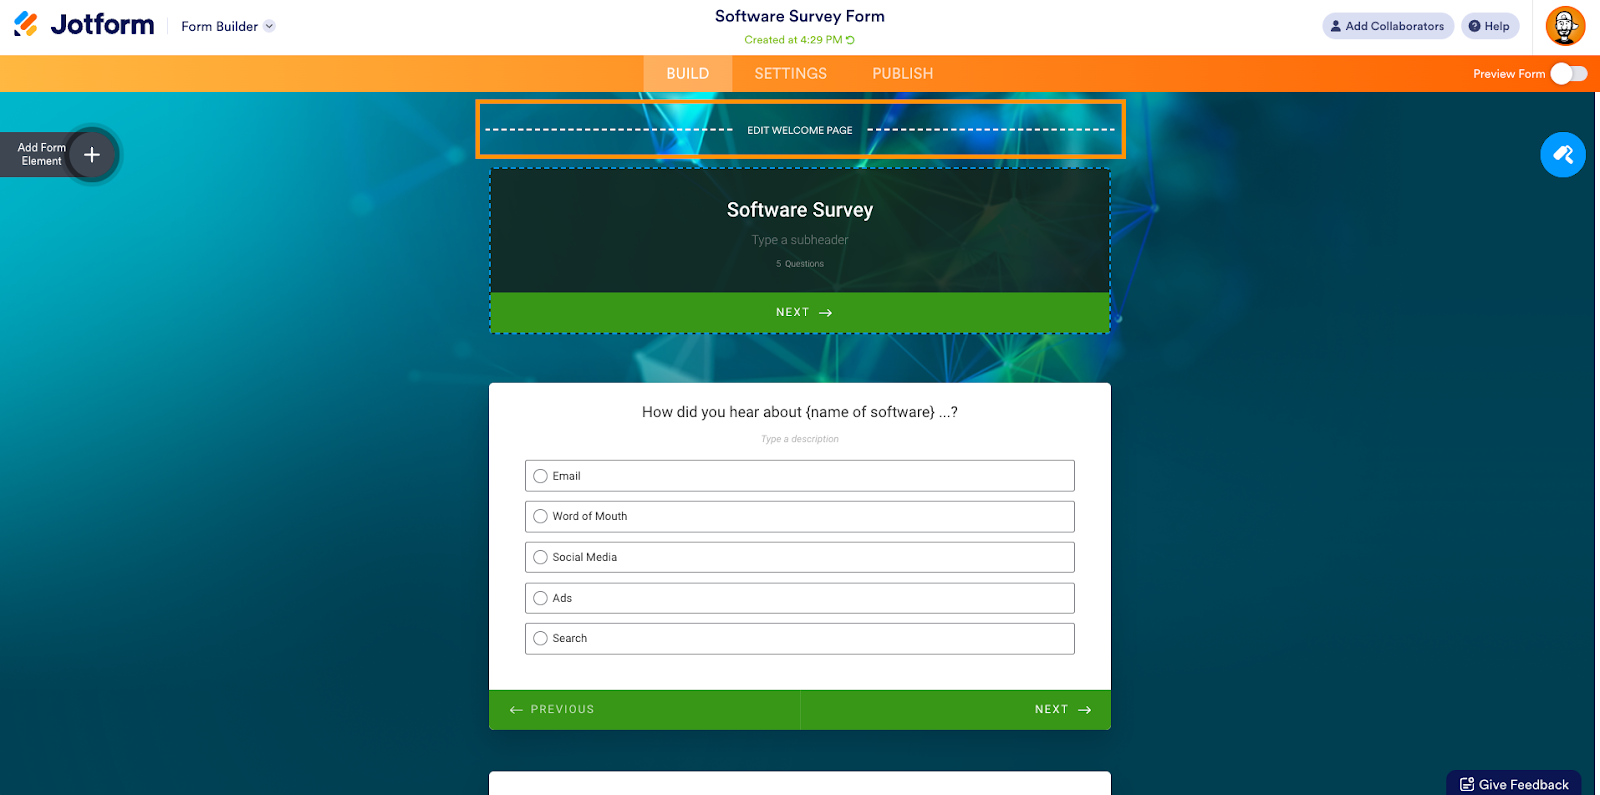 A screenshot of Jotform's form builder interface showing an in-progress software survey creation